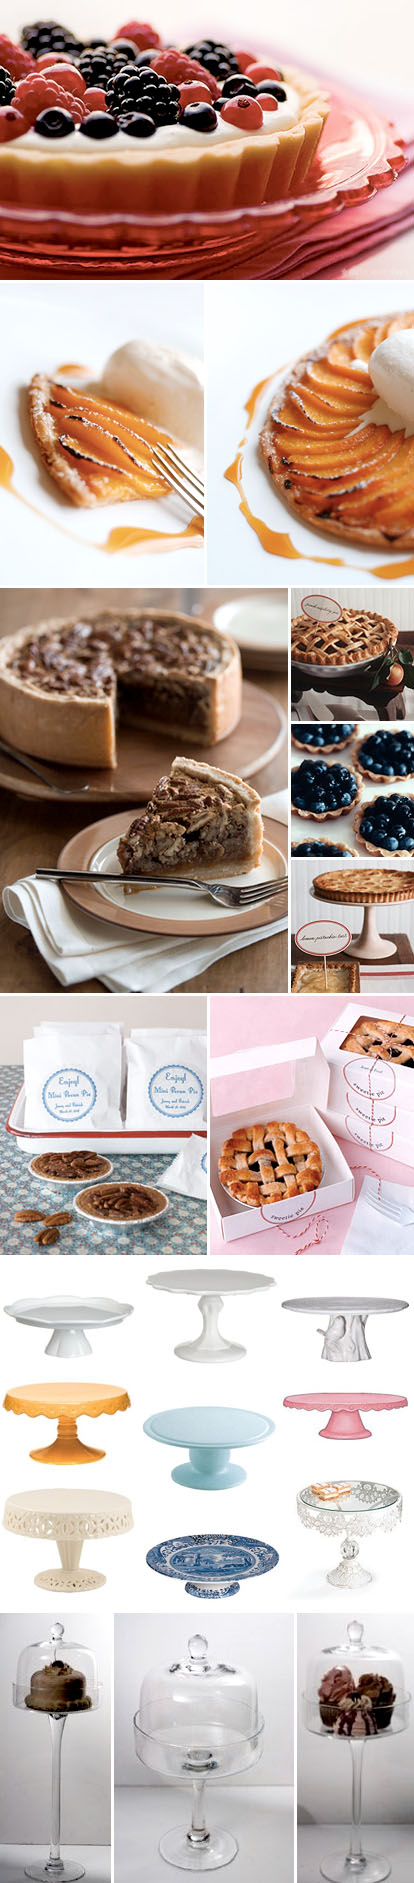 pies and tarts as wedding cake alternatives